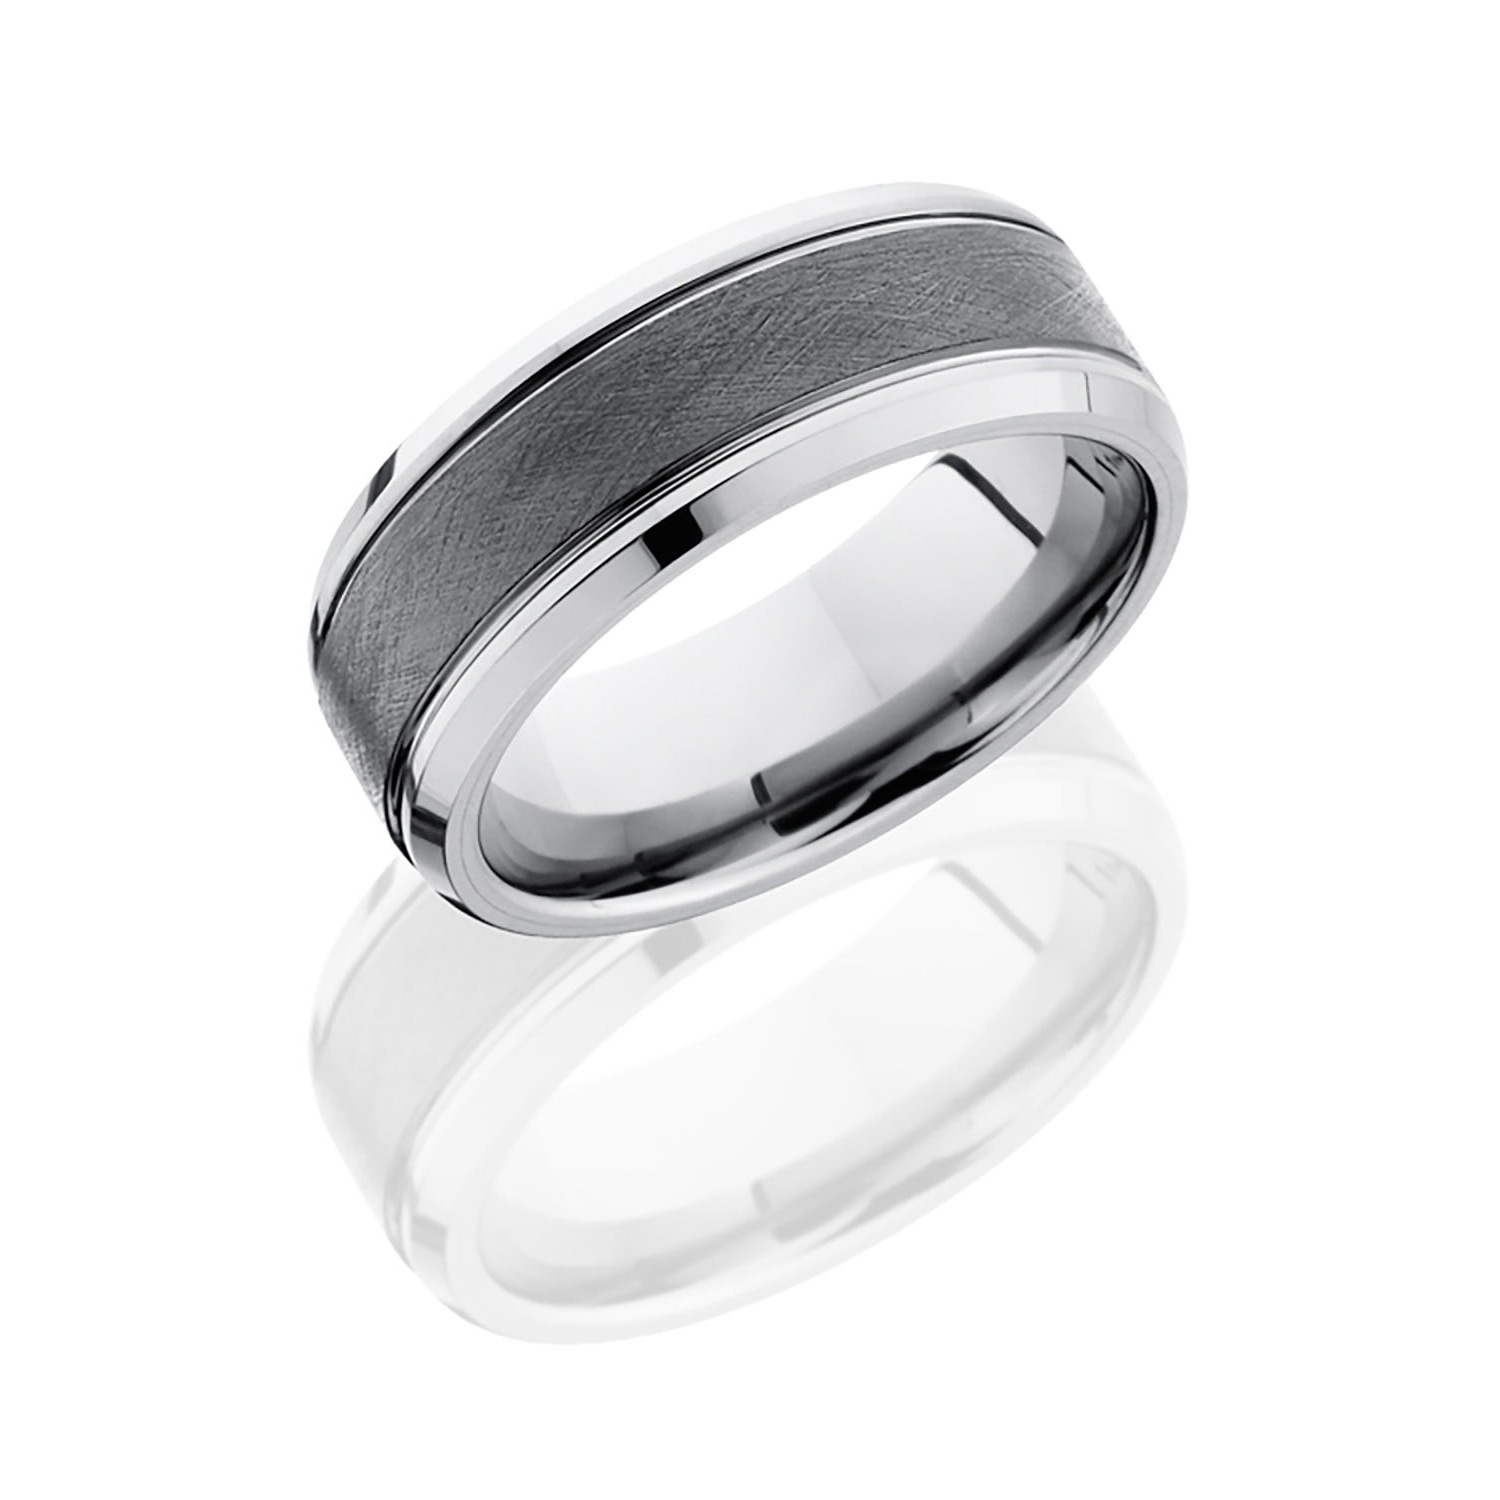 Lashbrook TCR9090 WIRE-POLISH Tungsten Ceramic Wedding Ring or Band